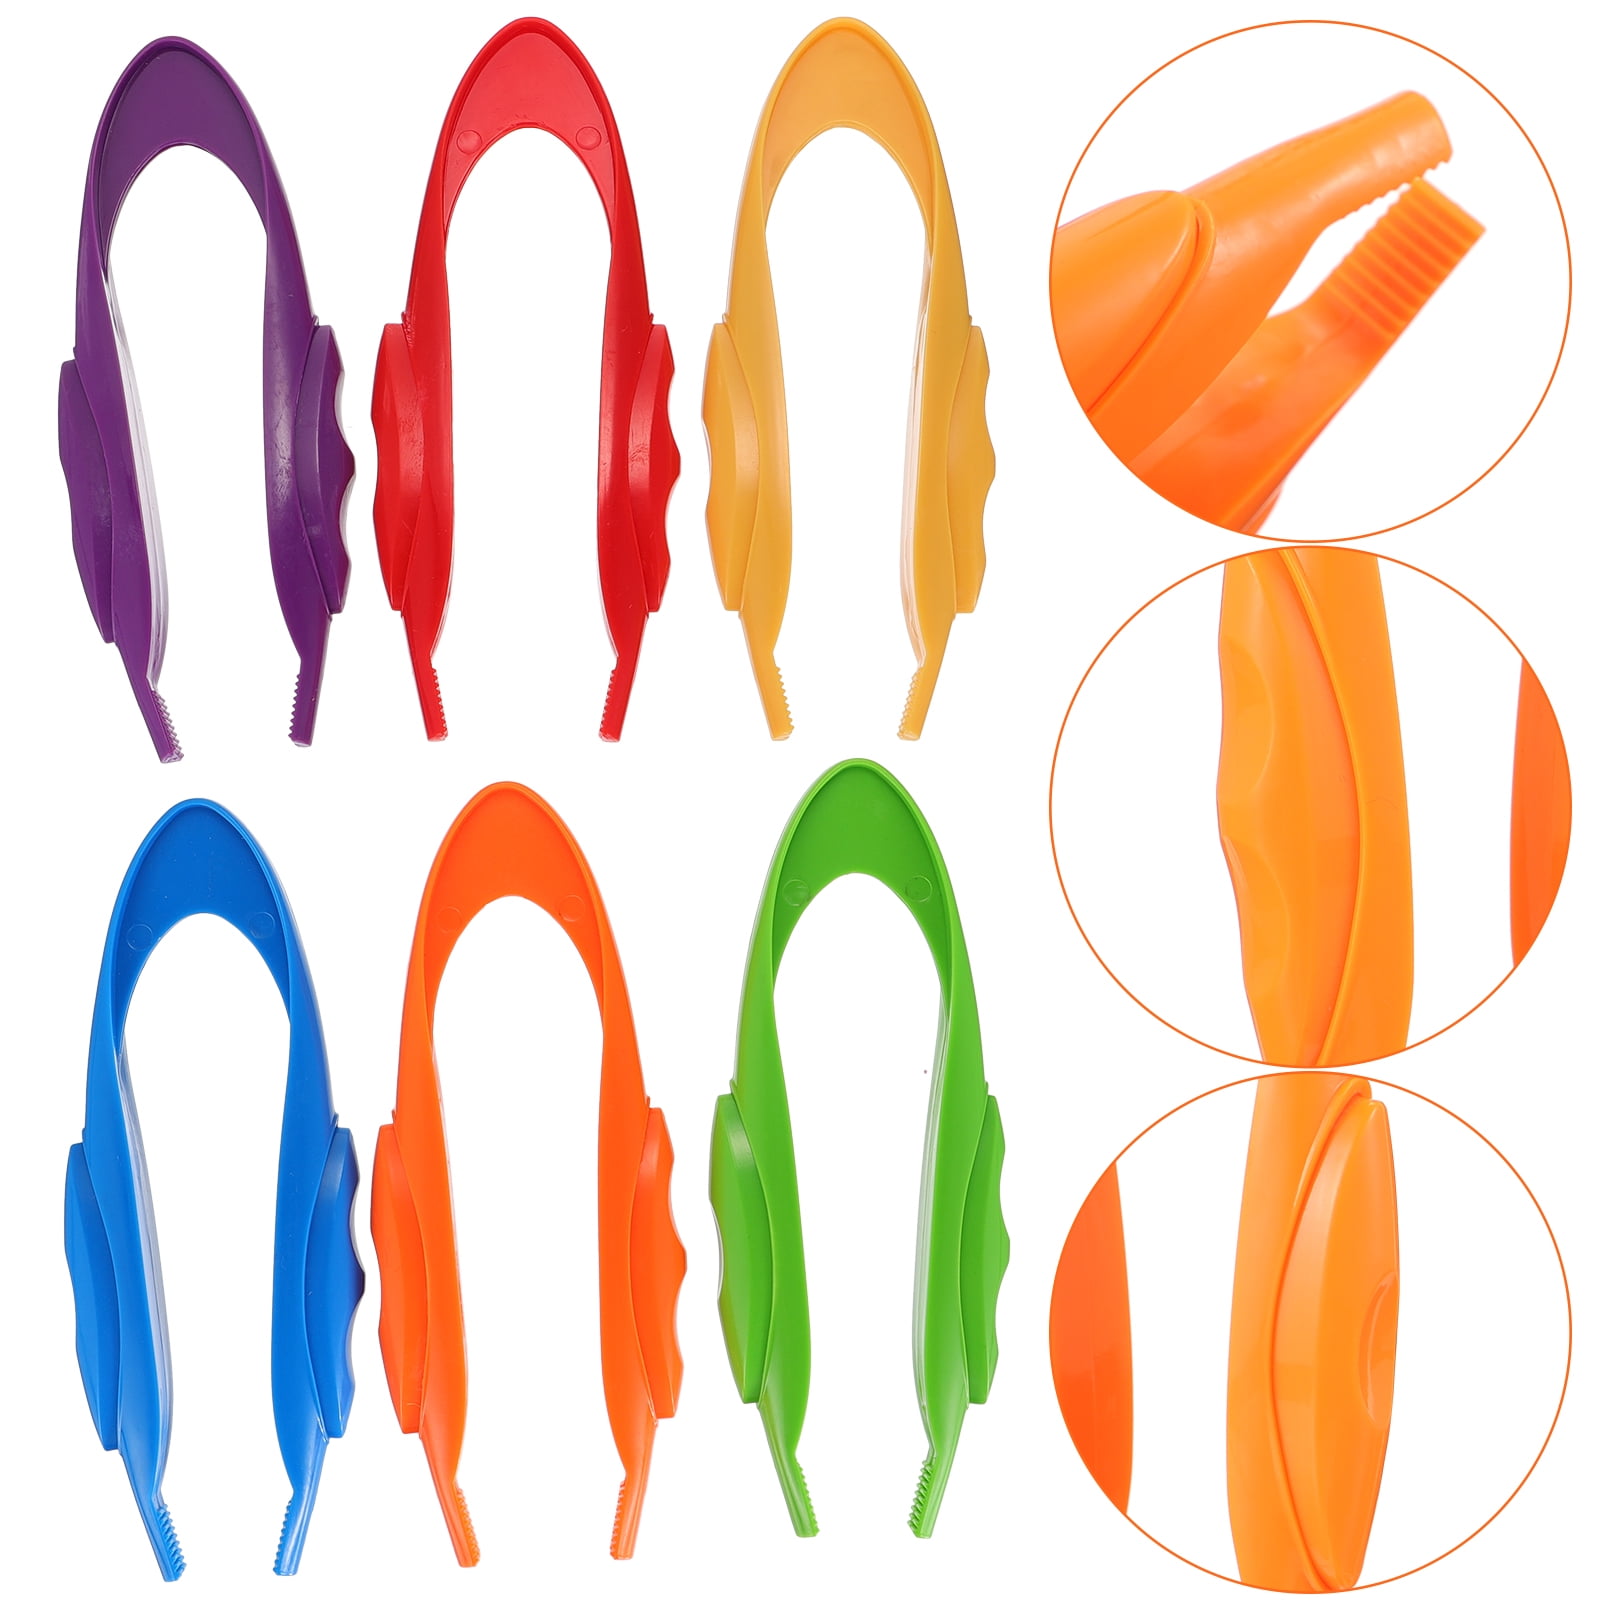 6pcs kids tweezers plastic colorful easy